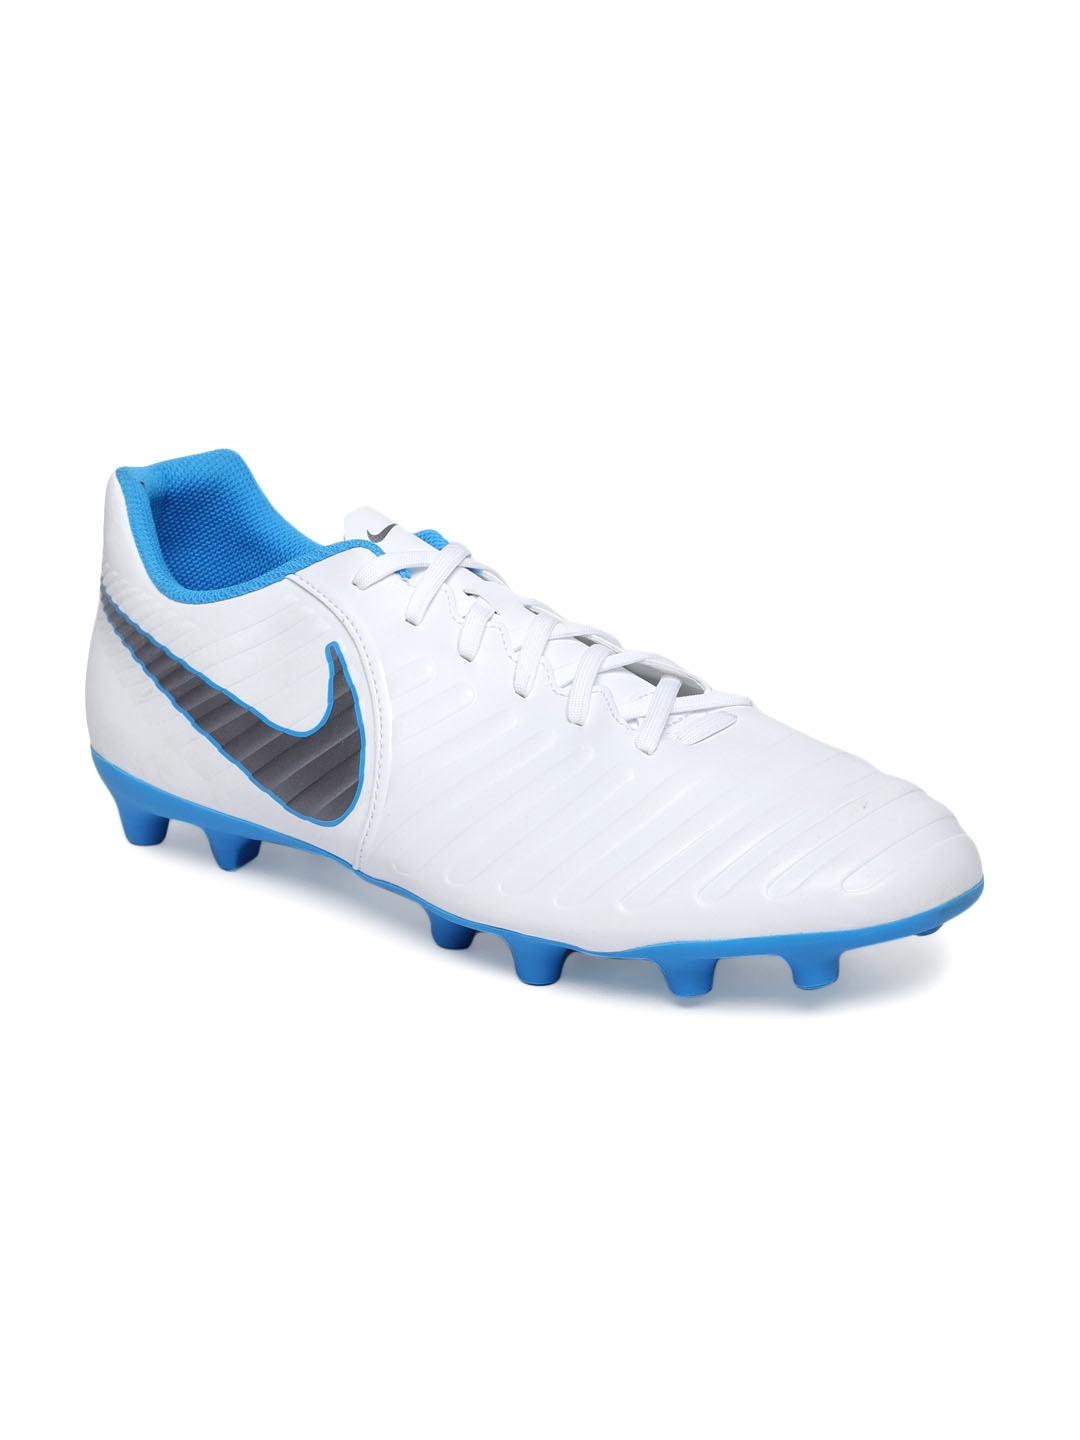 Buy Nike Men White Football Shoes - Sports Shoes for Men 8101917 | Myntra